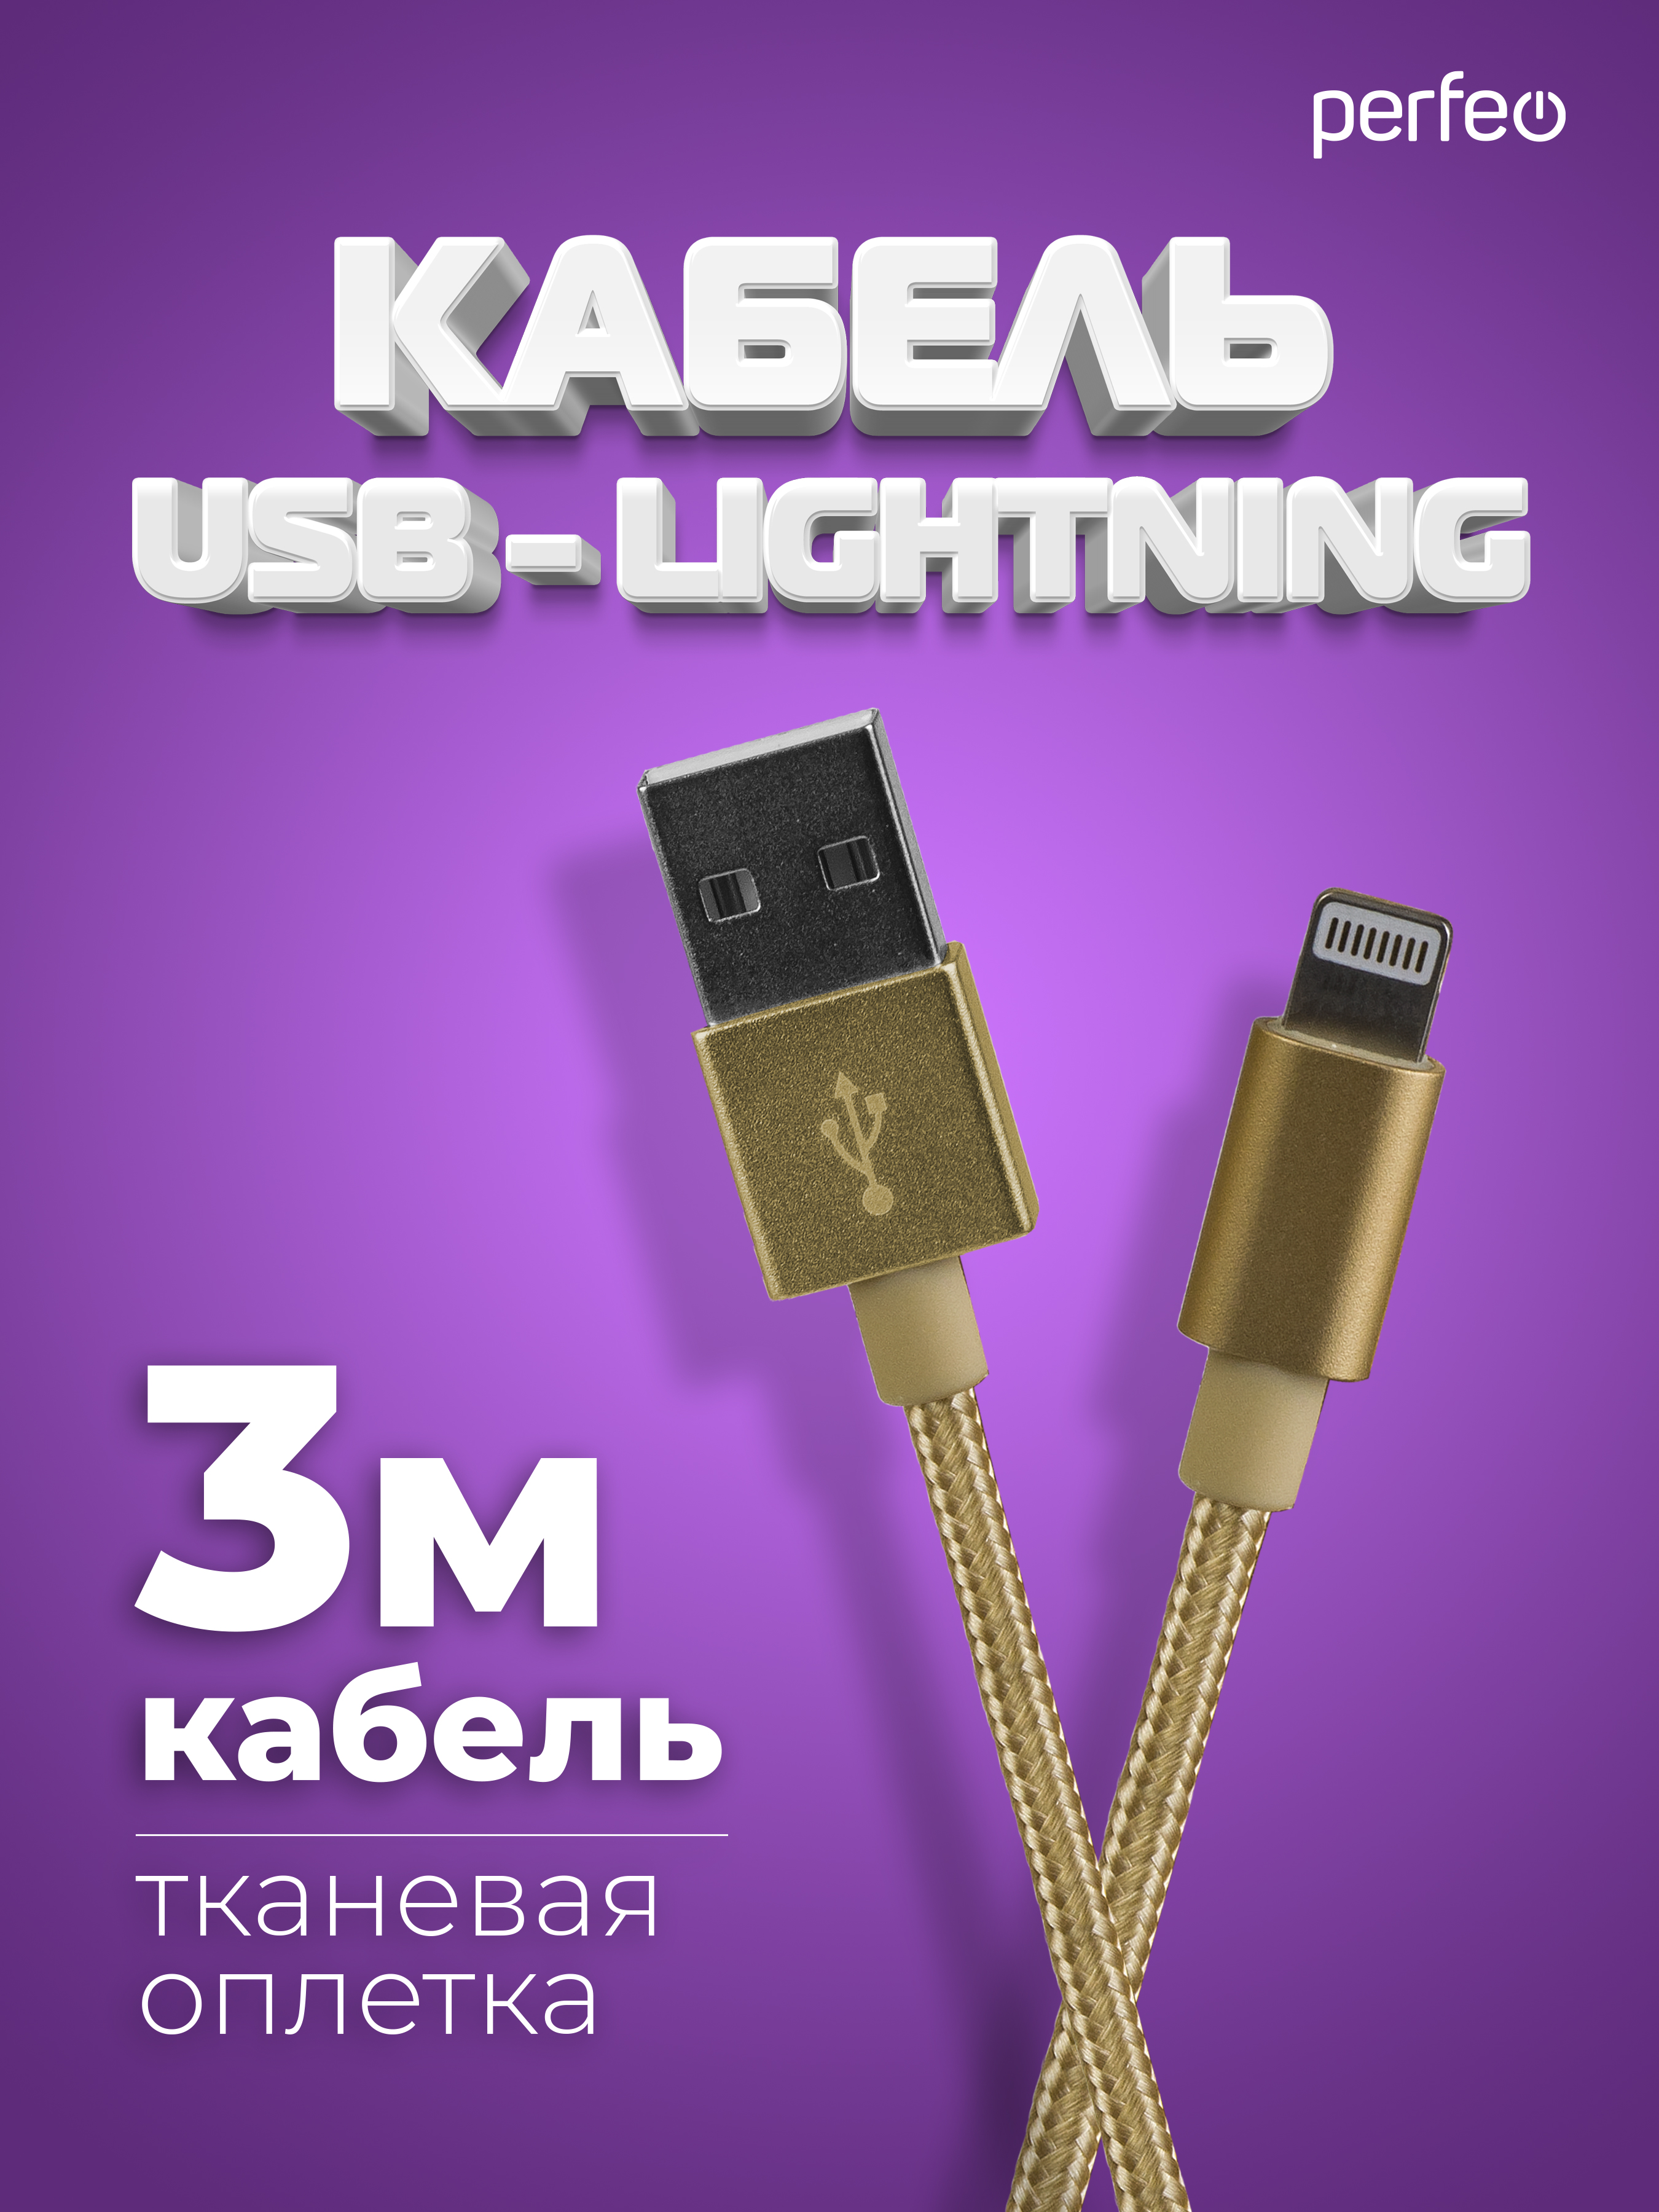 Кабель Perfeo для iPhone USB - 8 PIN Lightning золото длина 3 м. I4308 - фото 1